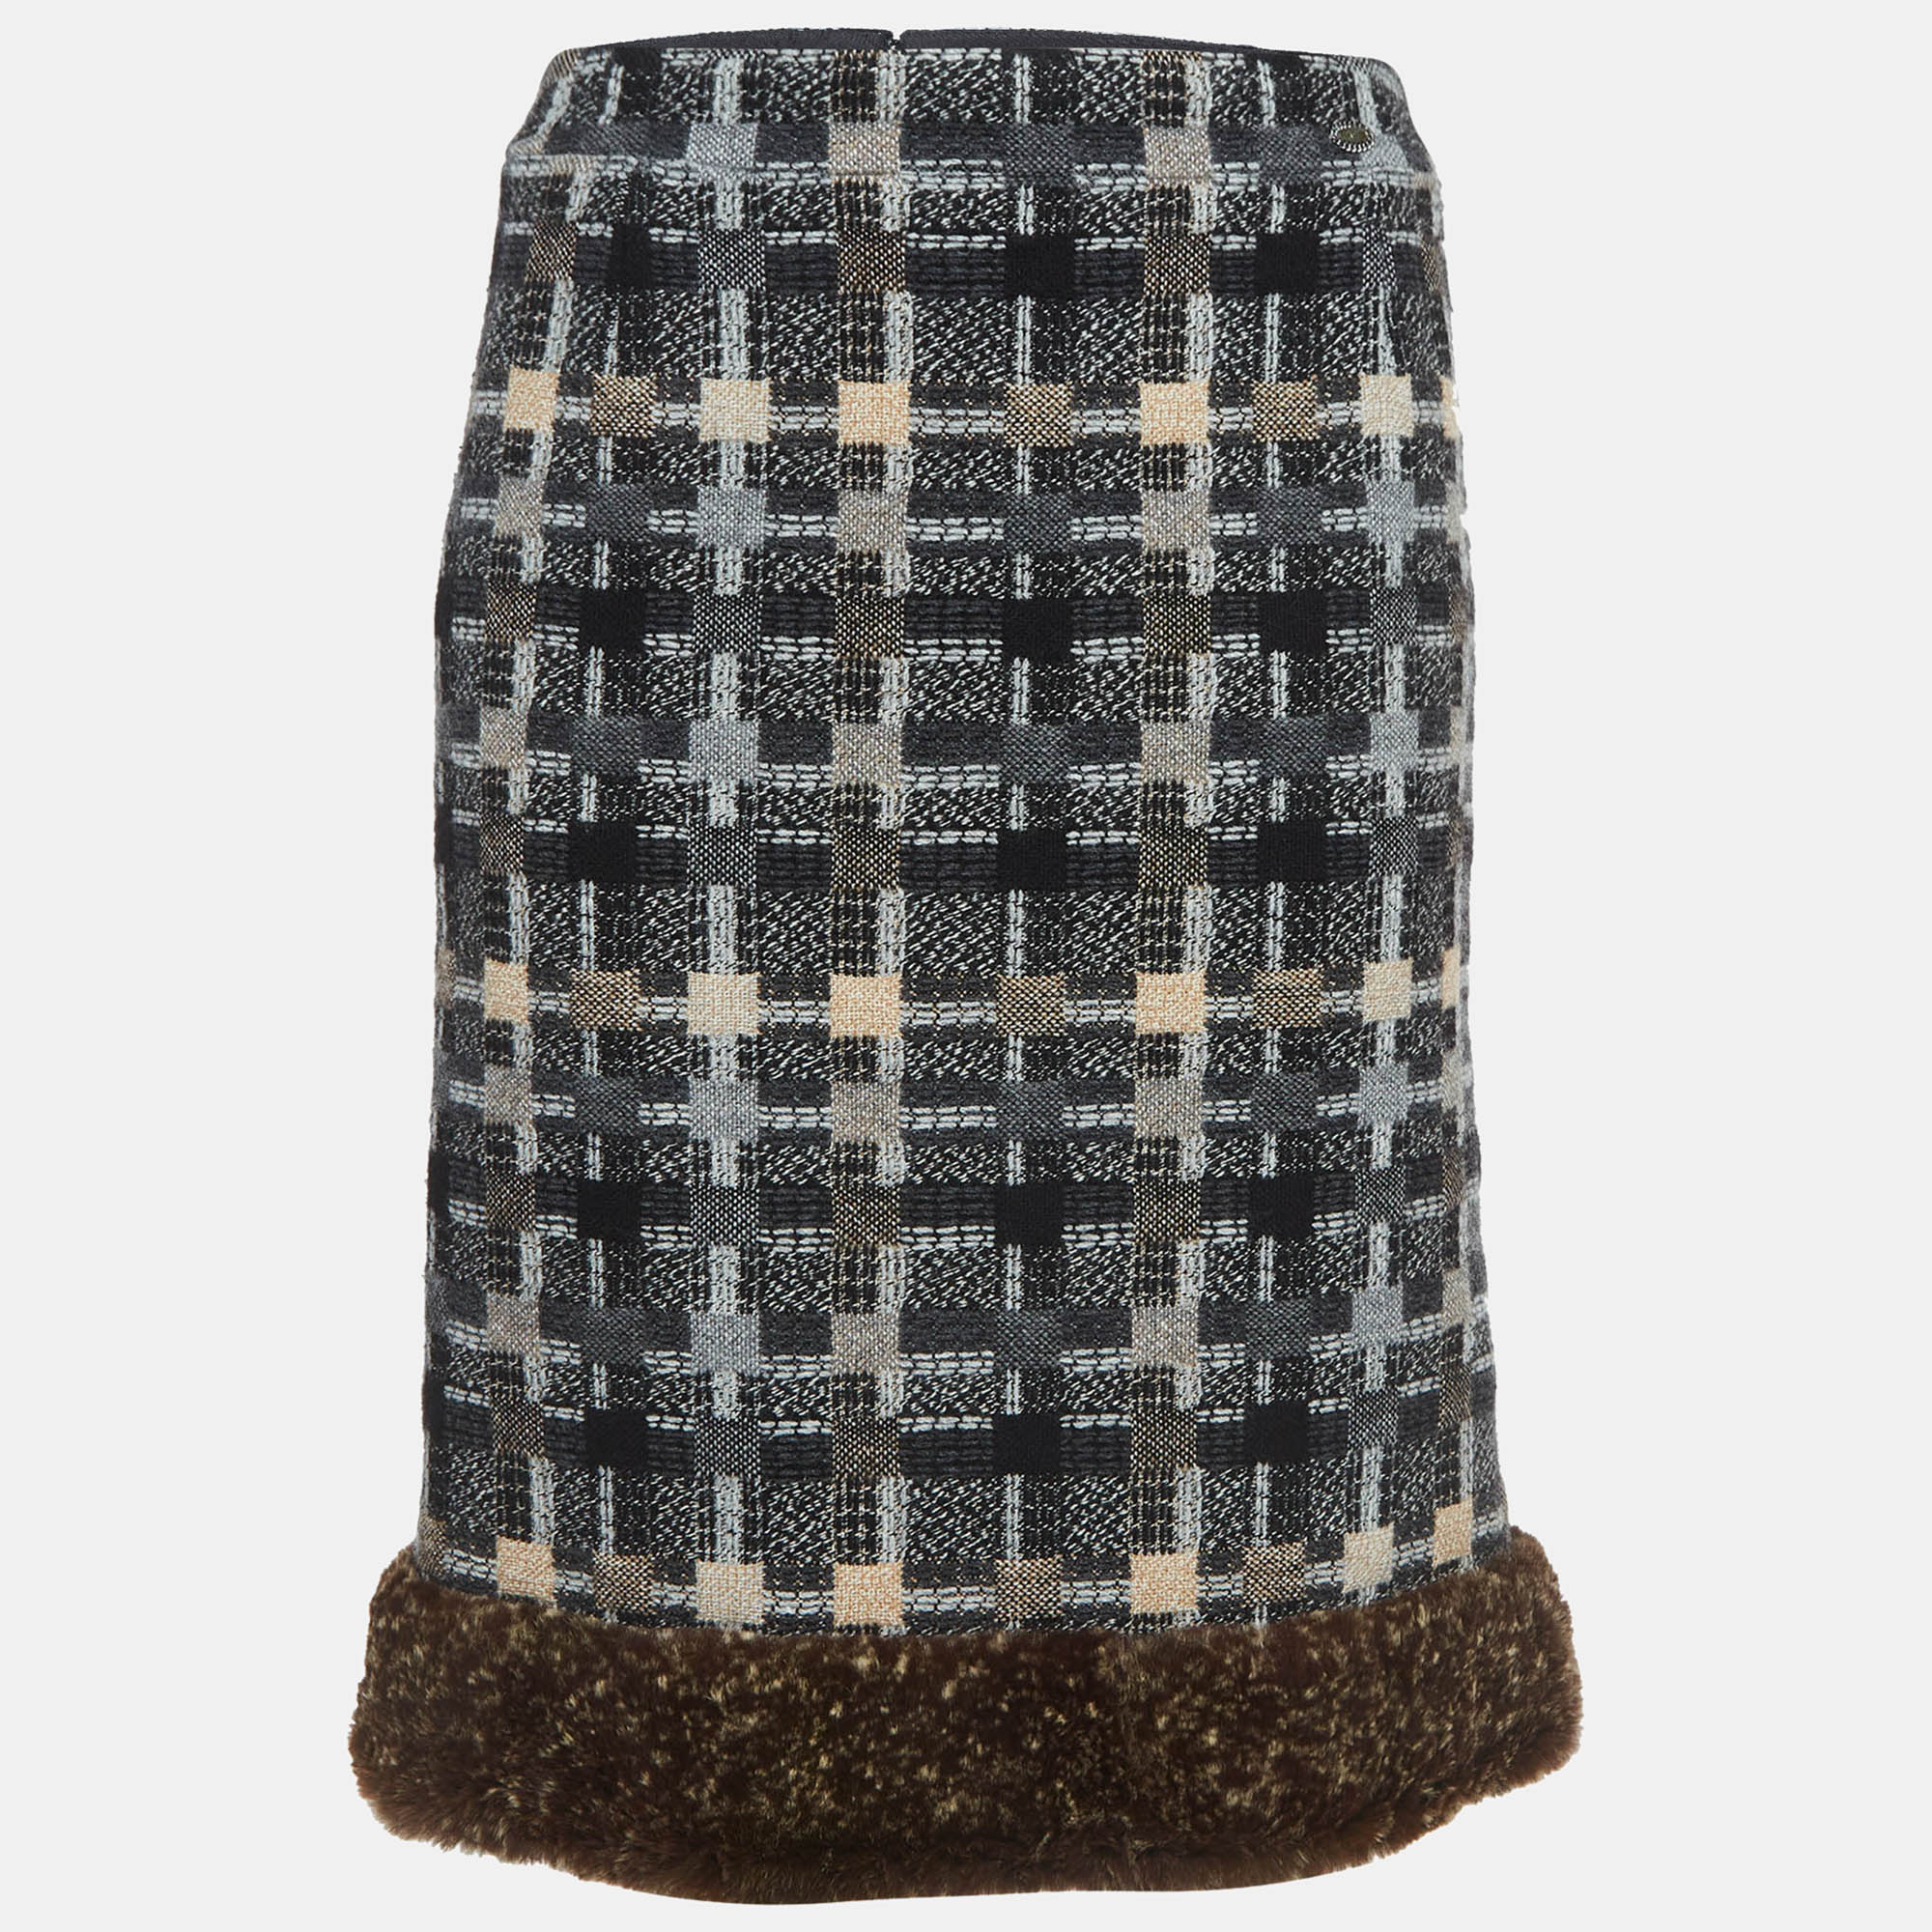 Chanel black/grey patterned wool fur trimmed skirt s